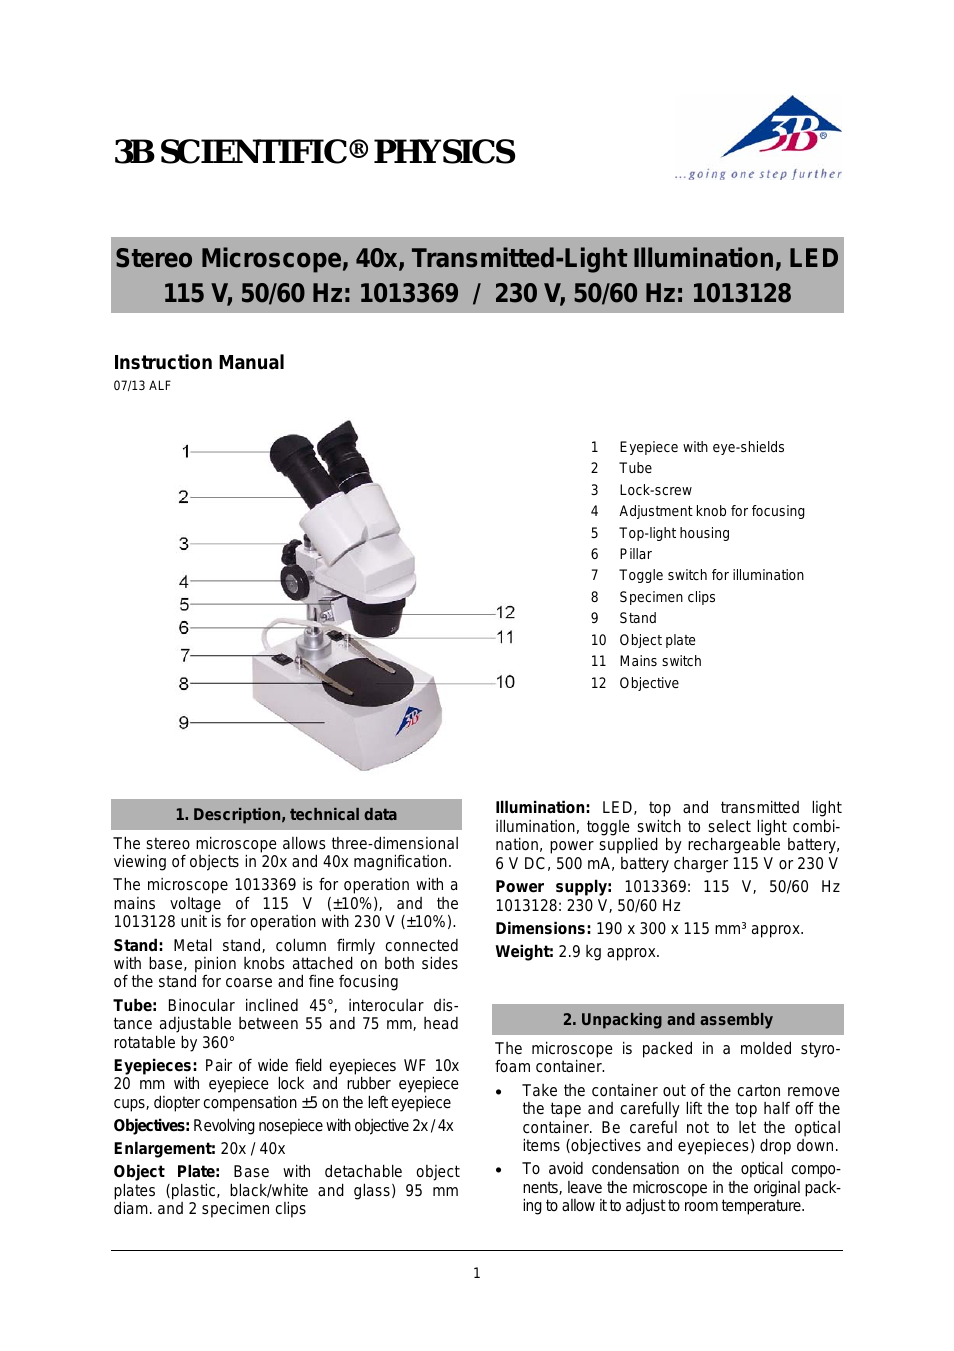 Stereo Microscope, 40x, Transmitted-Light Illumination LED (230 V, 50__60 Hz)